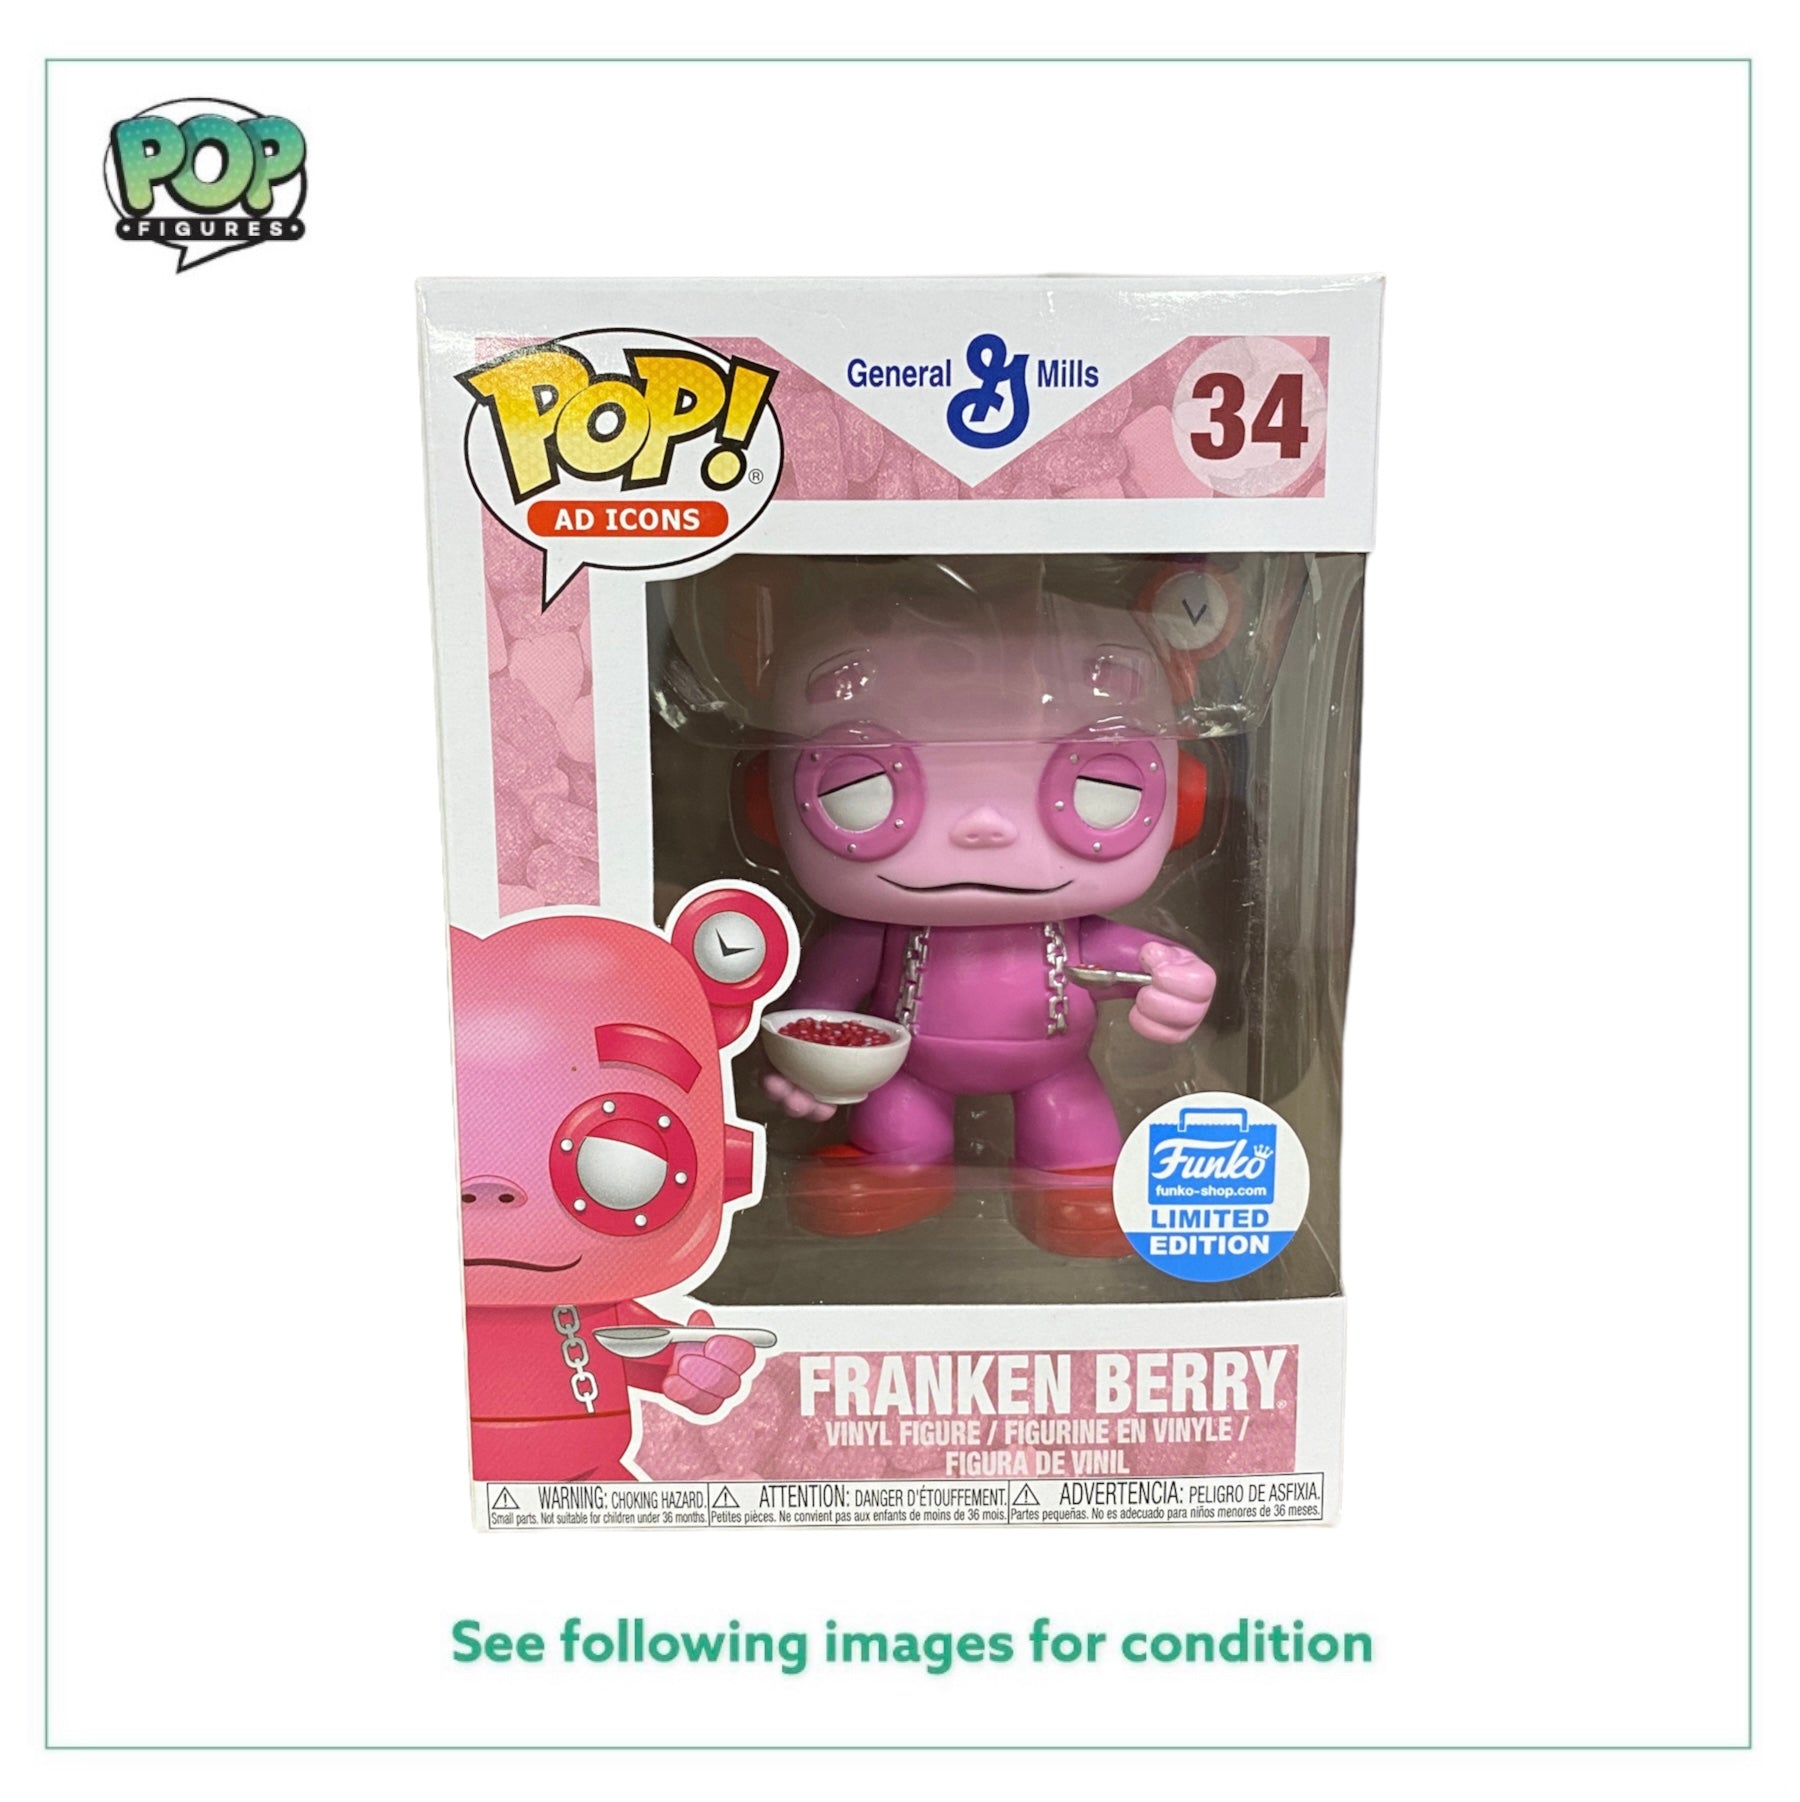 Franken Berry #34 (w/Cereal) Funko Pop! - Ad Icons - Funko Shop Exclusive - Condition 8.5/10